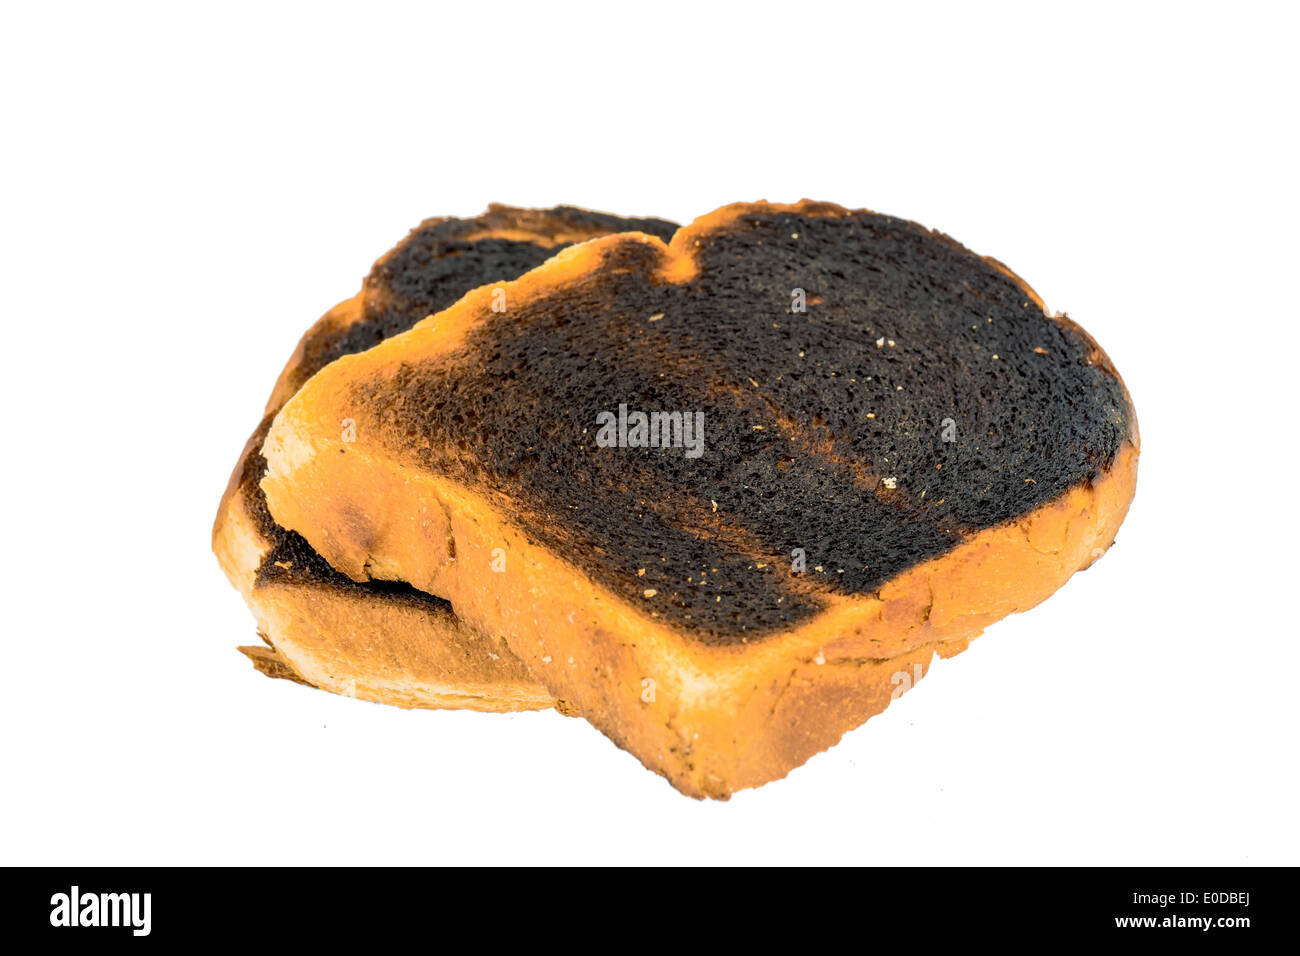 Griller le pain s'burntly. Burntly avec disques toast le petit-déjeuner., toasten Toastbrot wurde beim verbrannt. Banque D'Images